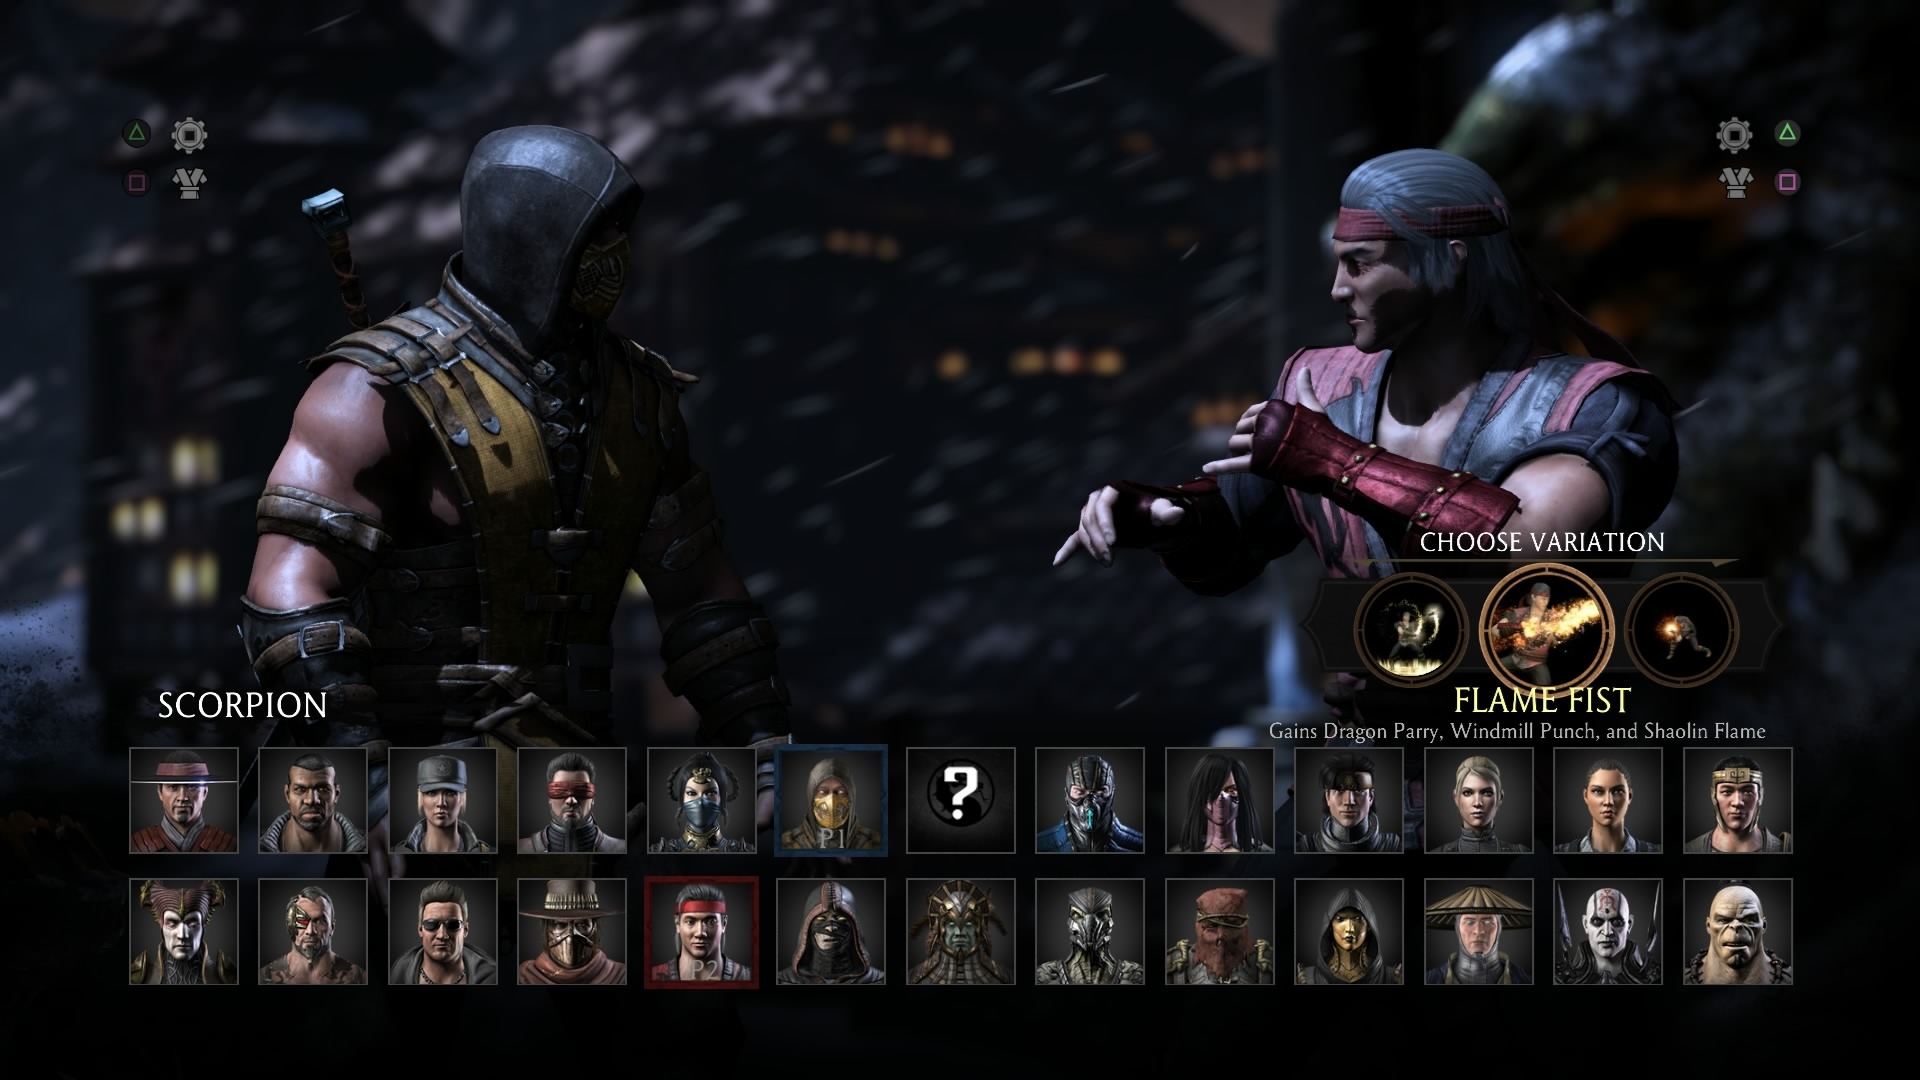 Mortal Kombat X Vrtil sa aj Liu Kang. Aj s nm si mete vybra jednu z troch bojovch varici.